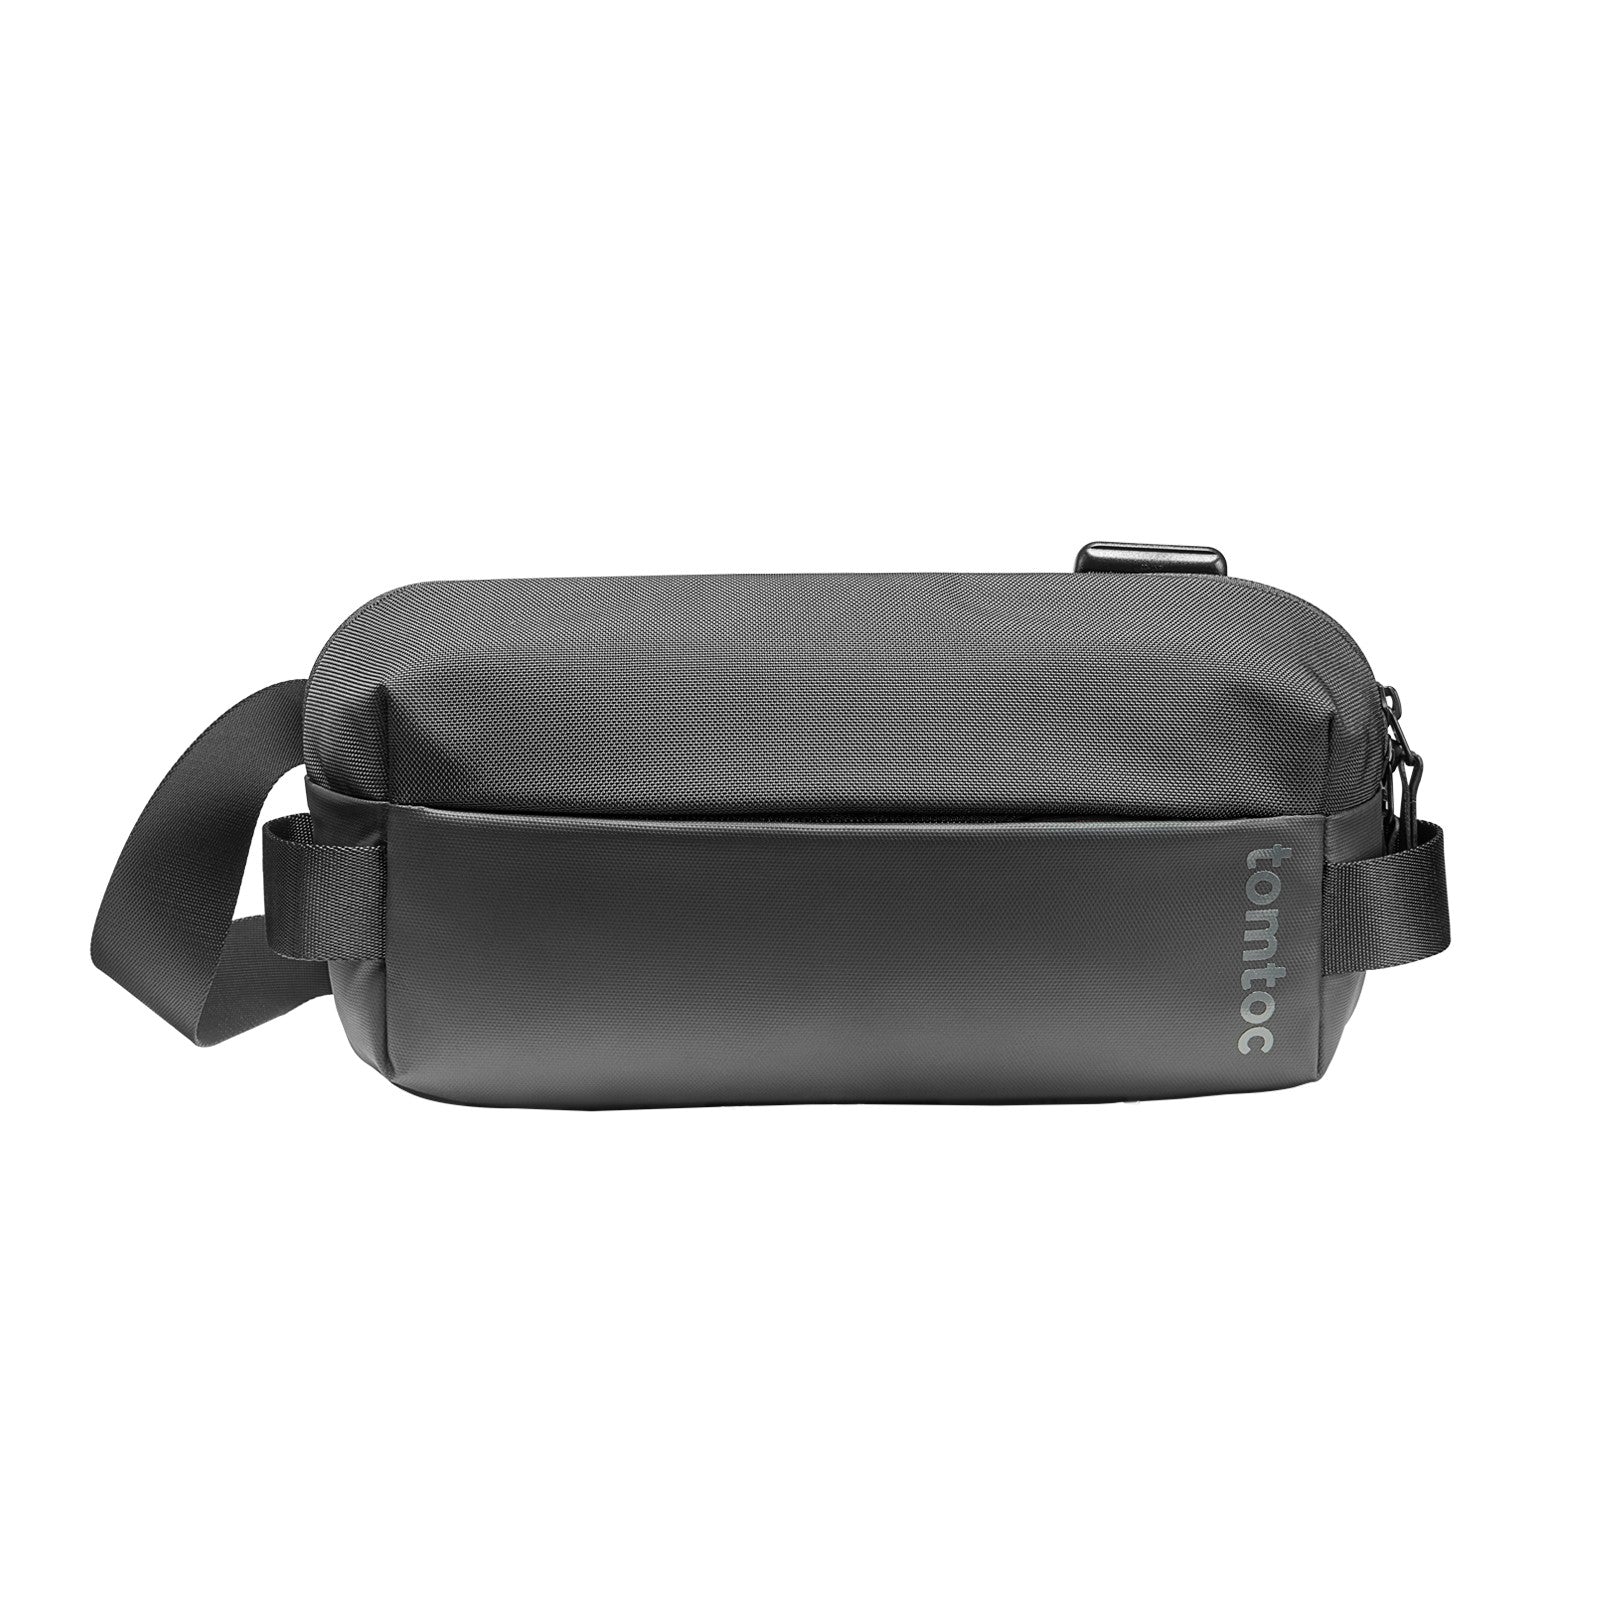 Tomtoc Urban Shoulder Bag for iPad Pro 11 Inch - Black